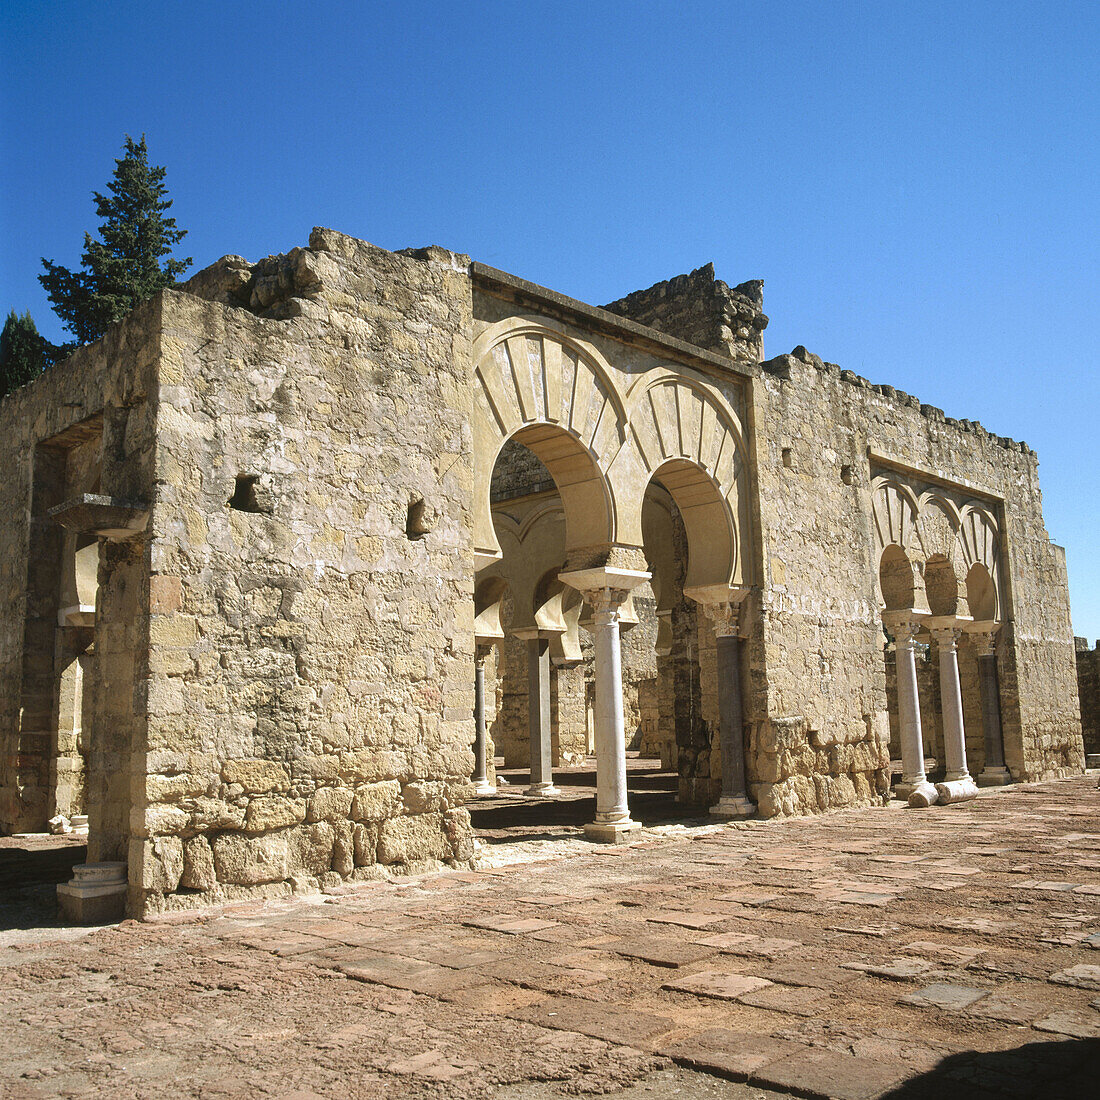 Dar al-Yund (Army House), Medina Azahara, Cordoba province, Spain